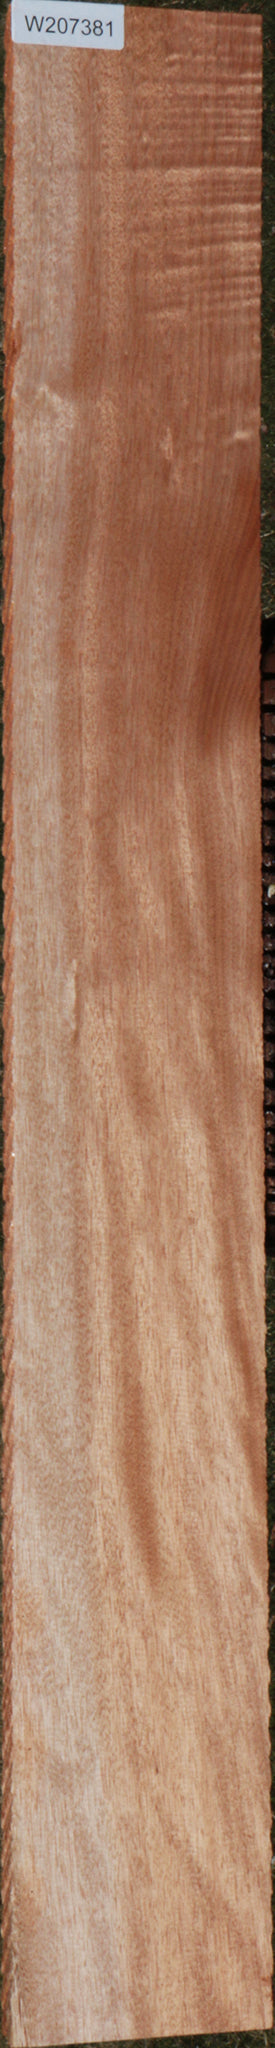 Extra Fancy Okoume Lumber